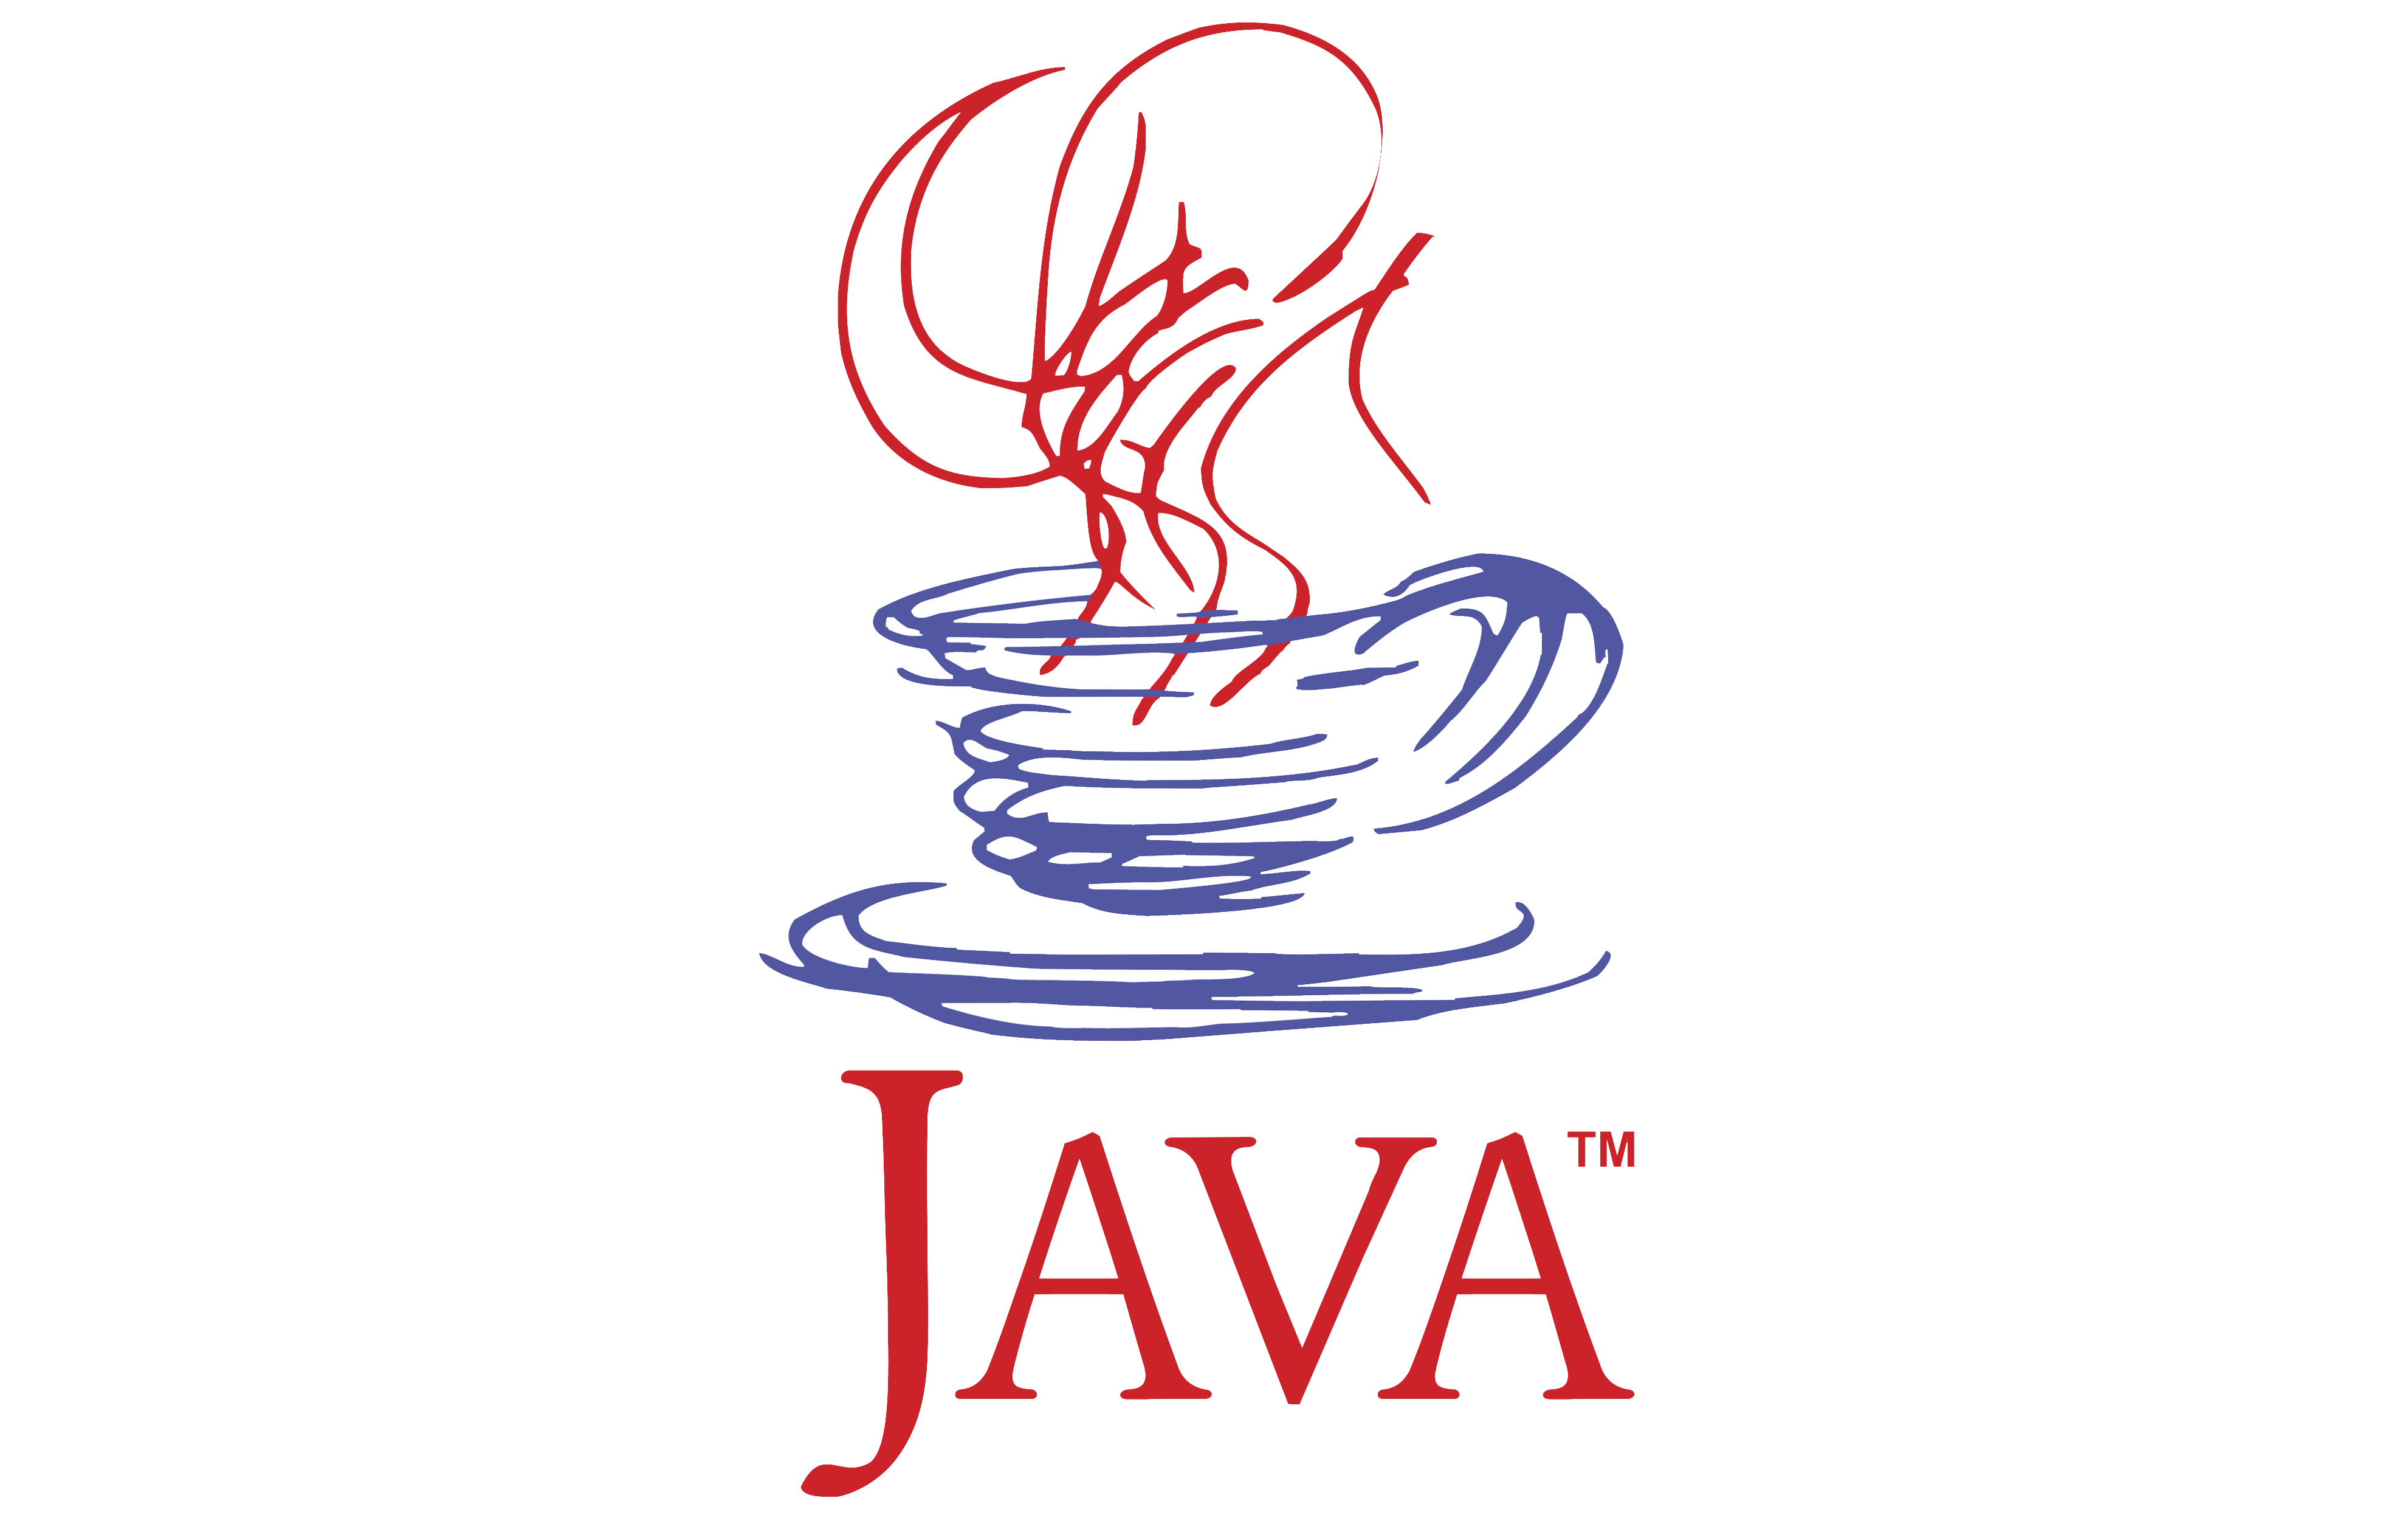 Java PNG Transparent Java.PNG Images. | PlusPNG